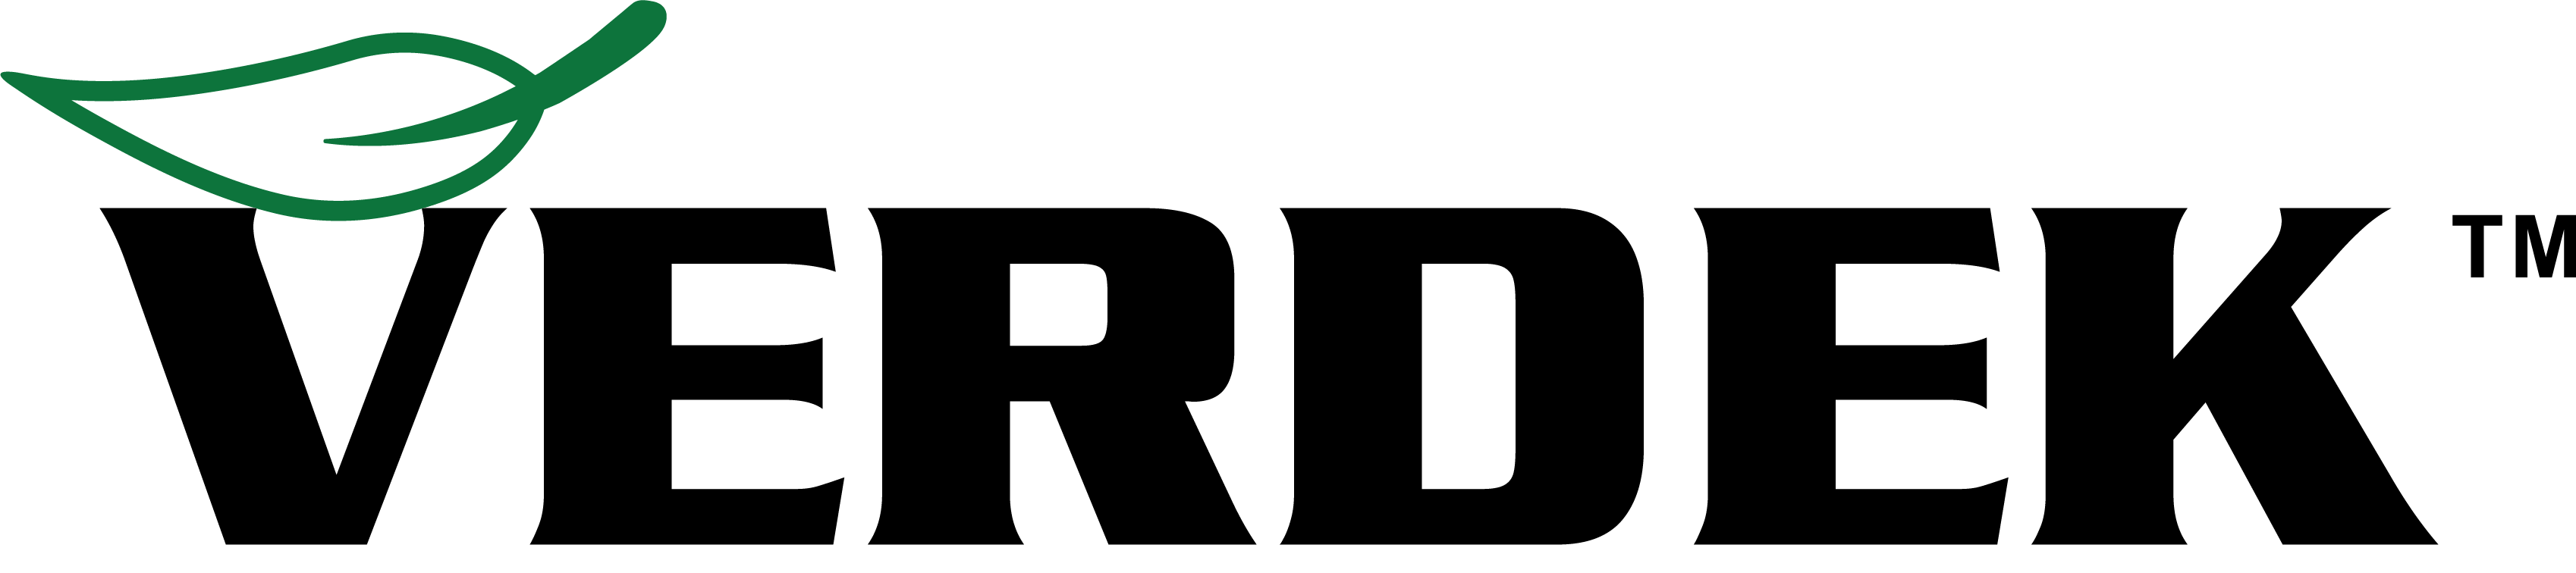 Verdek logo copy